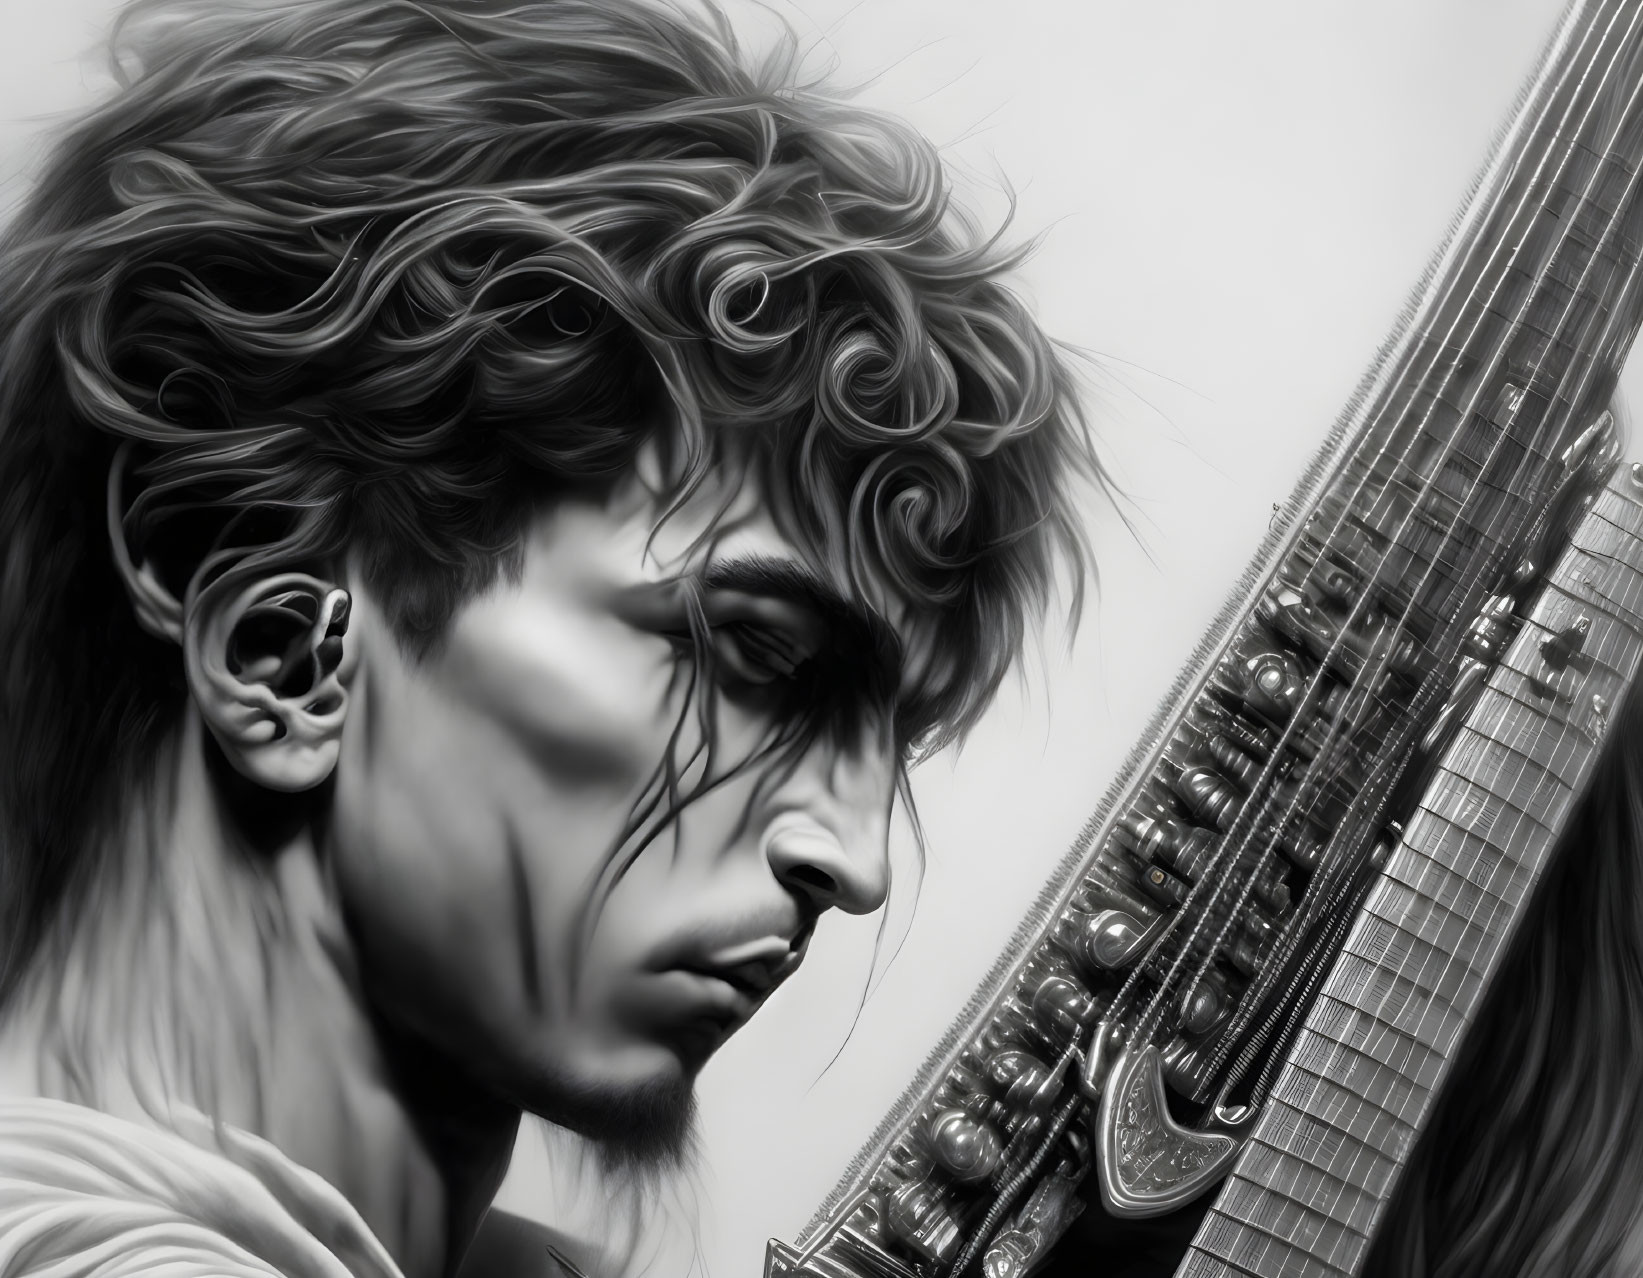 Monochrome digital art: pensive man with wavy hair beside intricate electric guitar